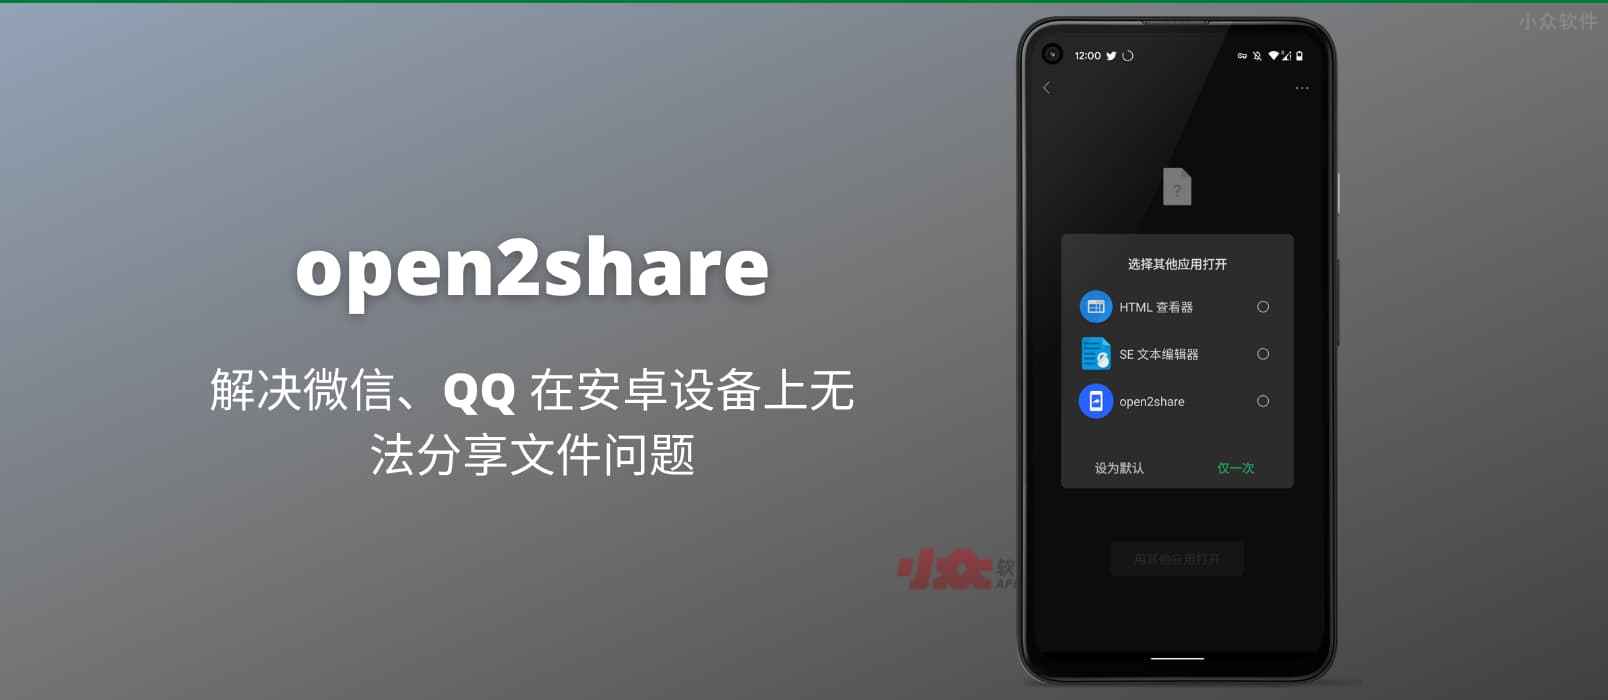 open2share – 解决微信无法分享文件到电脑的问题[Android]